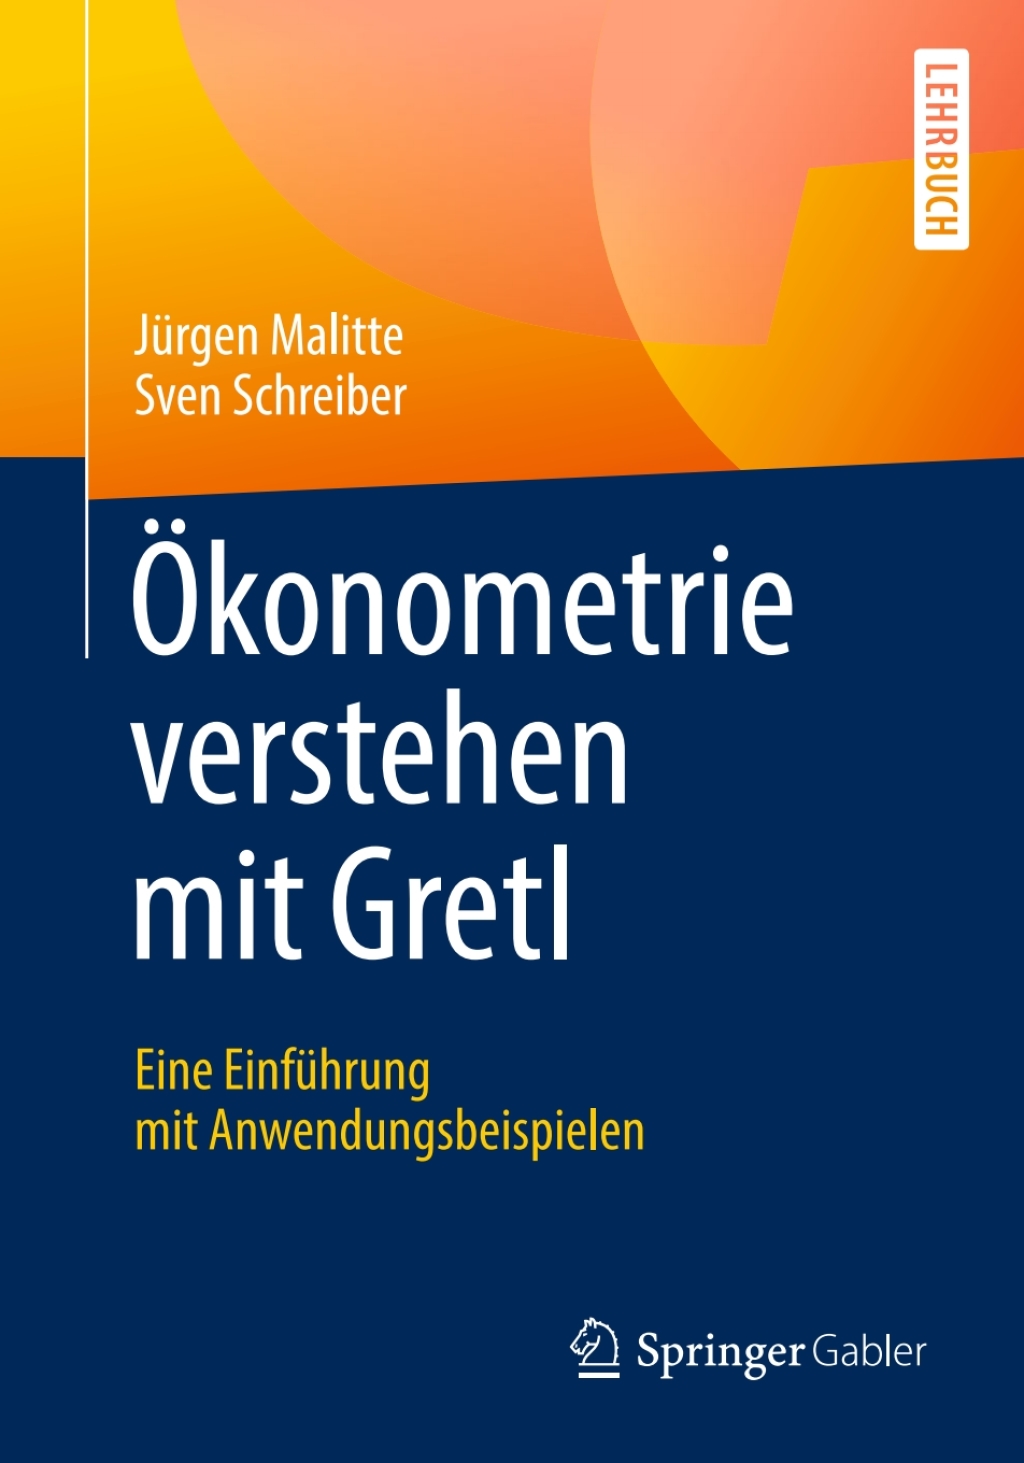 Ã?konometrie verstehen mit Gretl (eBook) - JÃ¼rgen Malitte; Sven Schreiber,